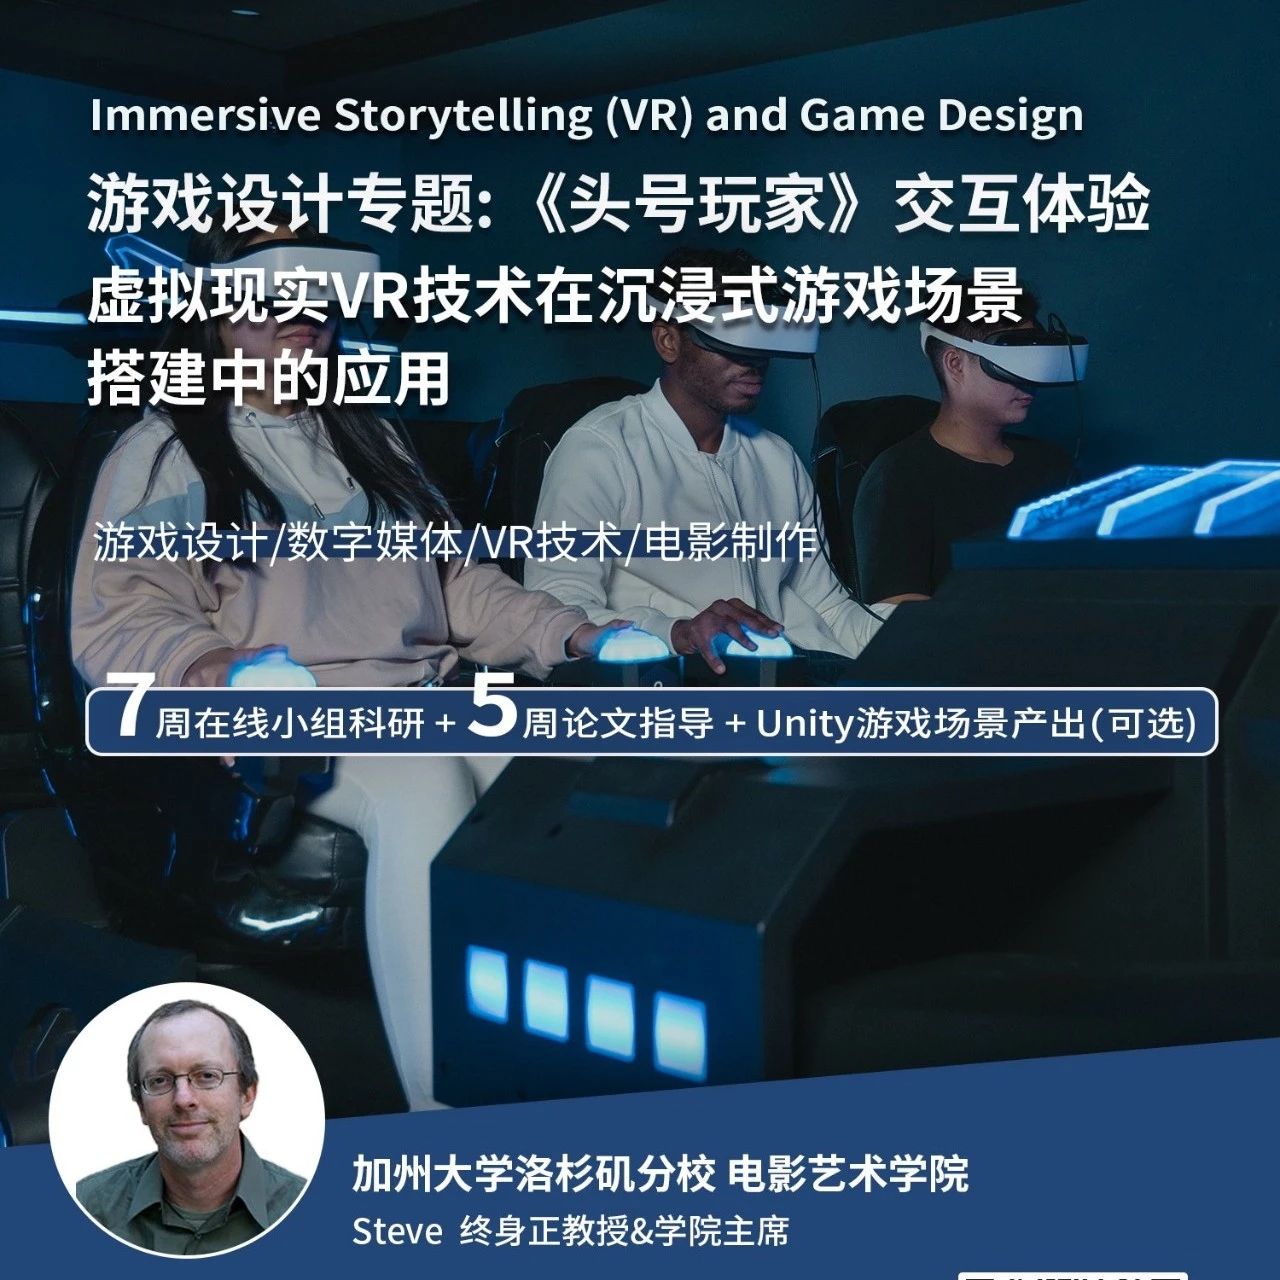 UCLA 游戏设计专题科研项目：《头号玩家》交互体验 虚拟现实VR技术在沉浸式游戏场景搭建中的应用